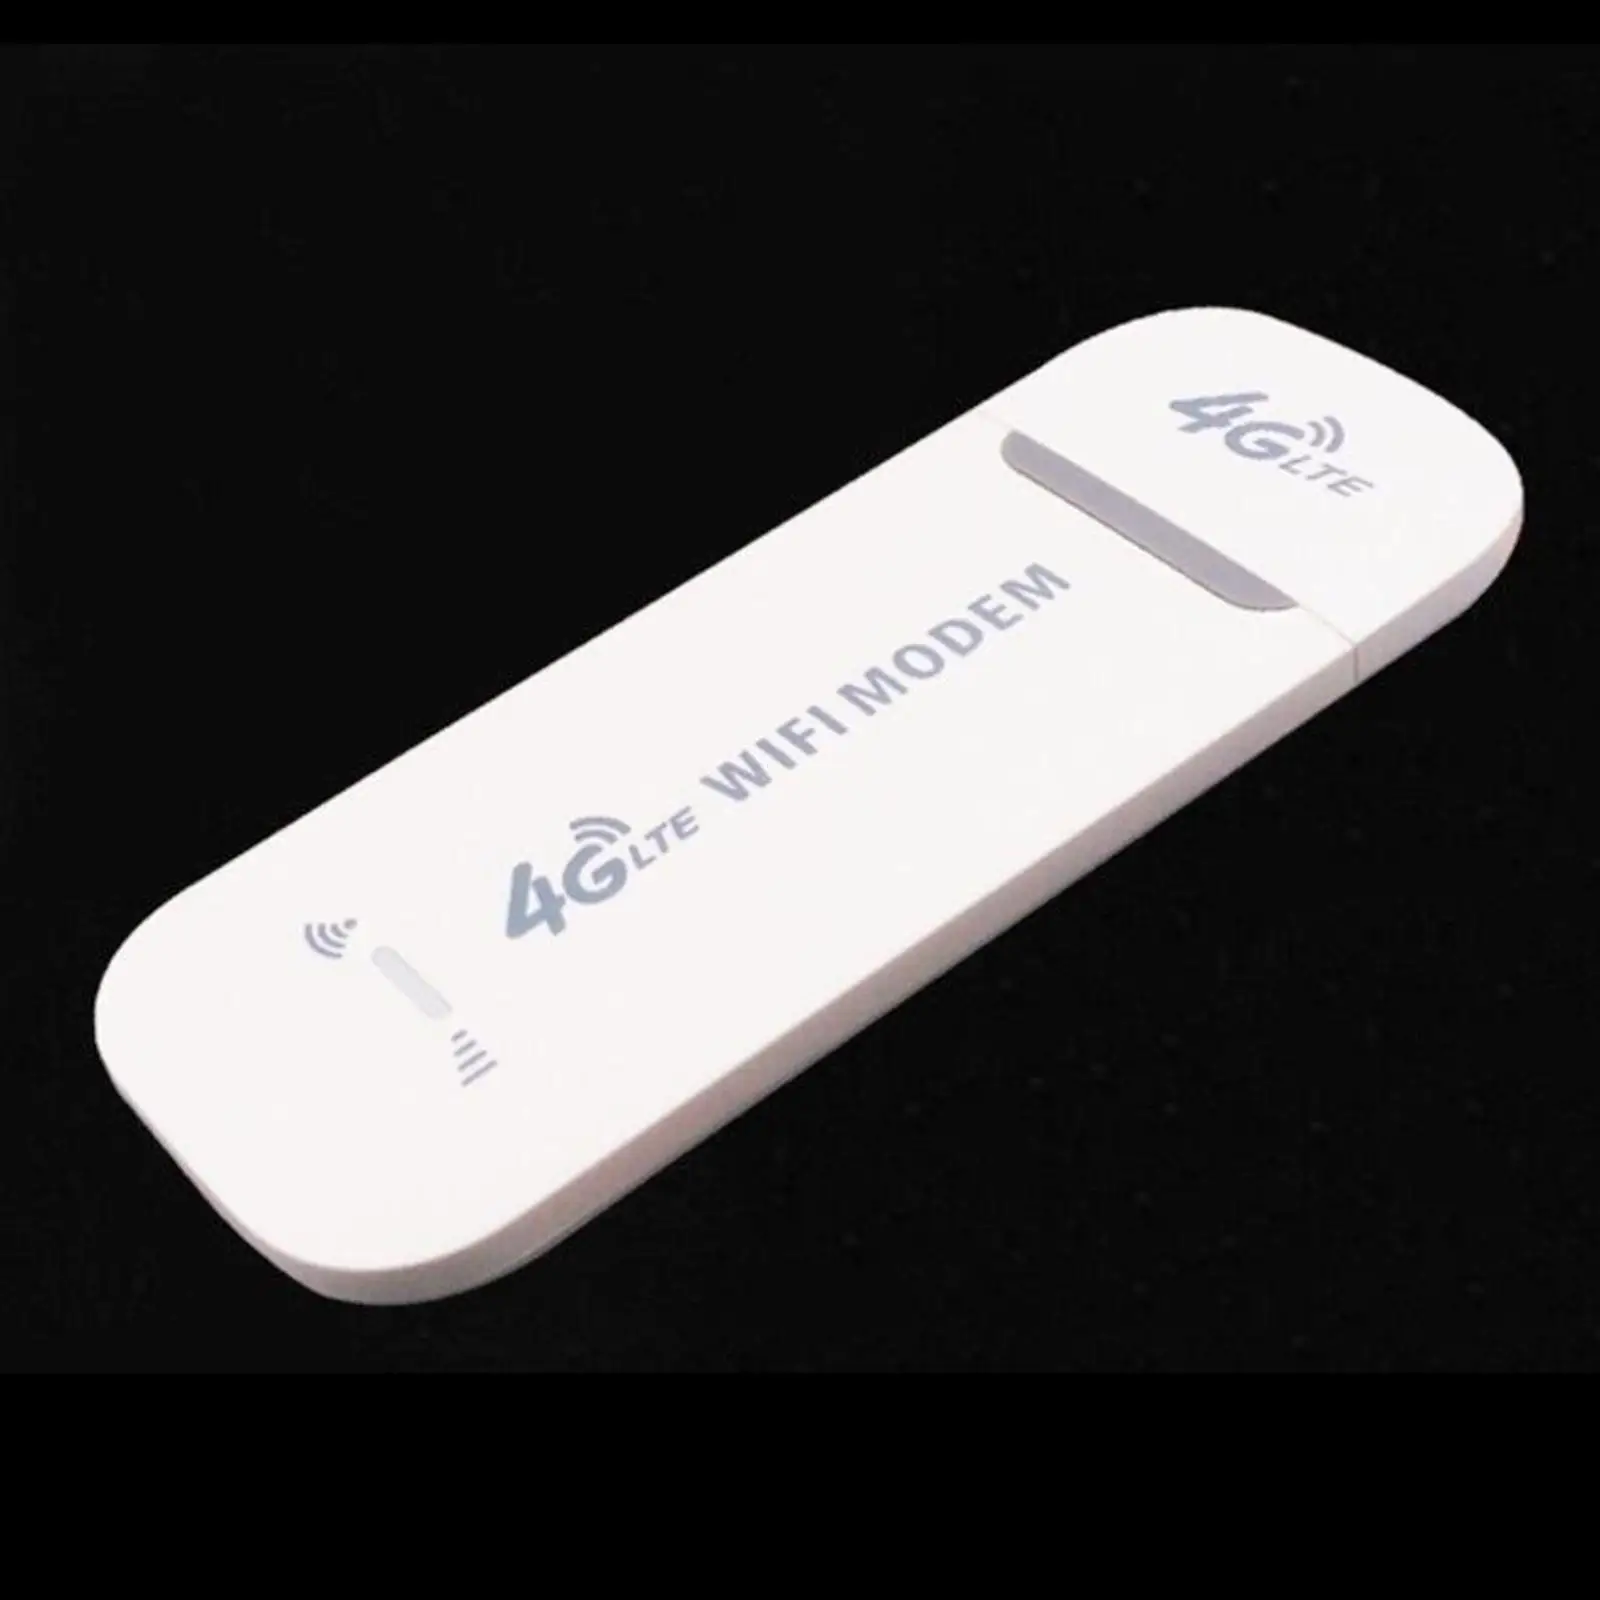 4G LTE USB Modem Dongle Mobile Broadband Sim Card Stick 150Mbps Wireless WiFi Hotspot Network Card Portable Router for Desktop